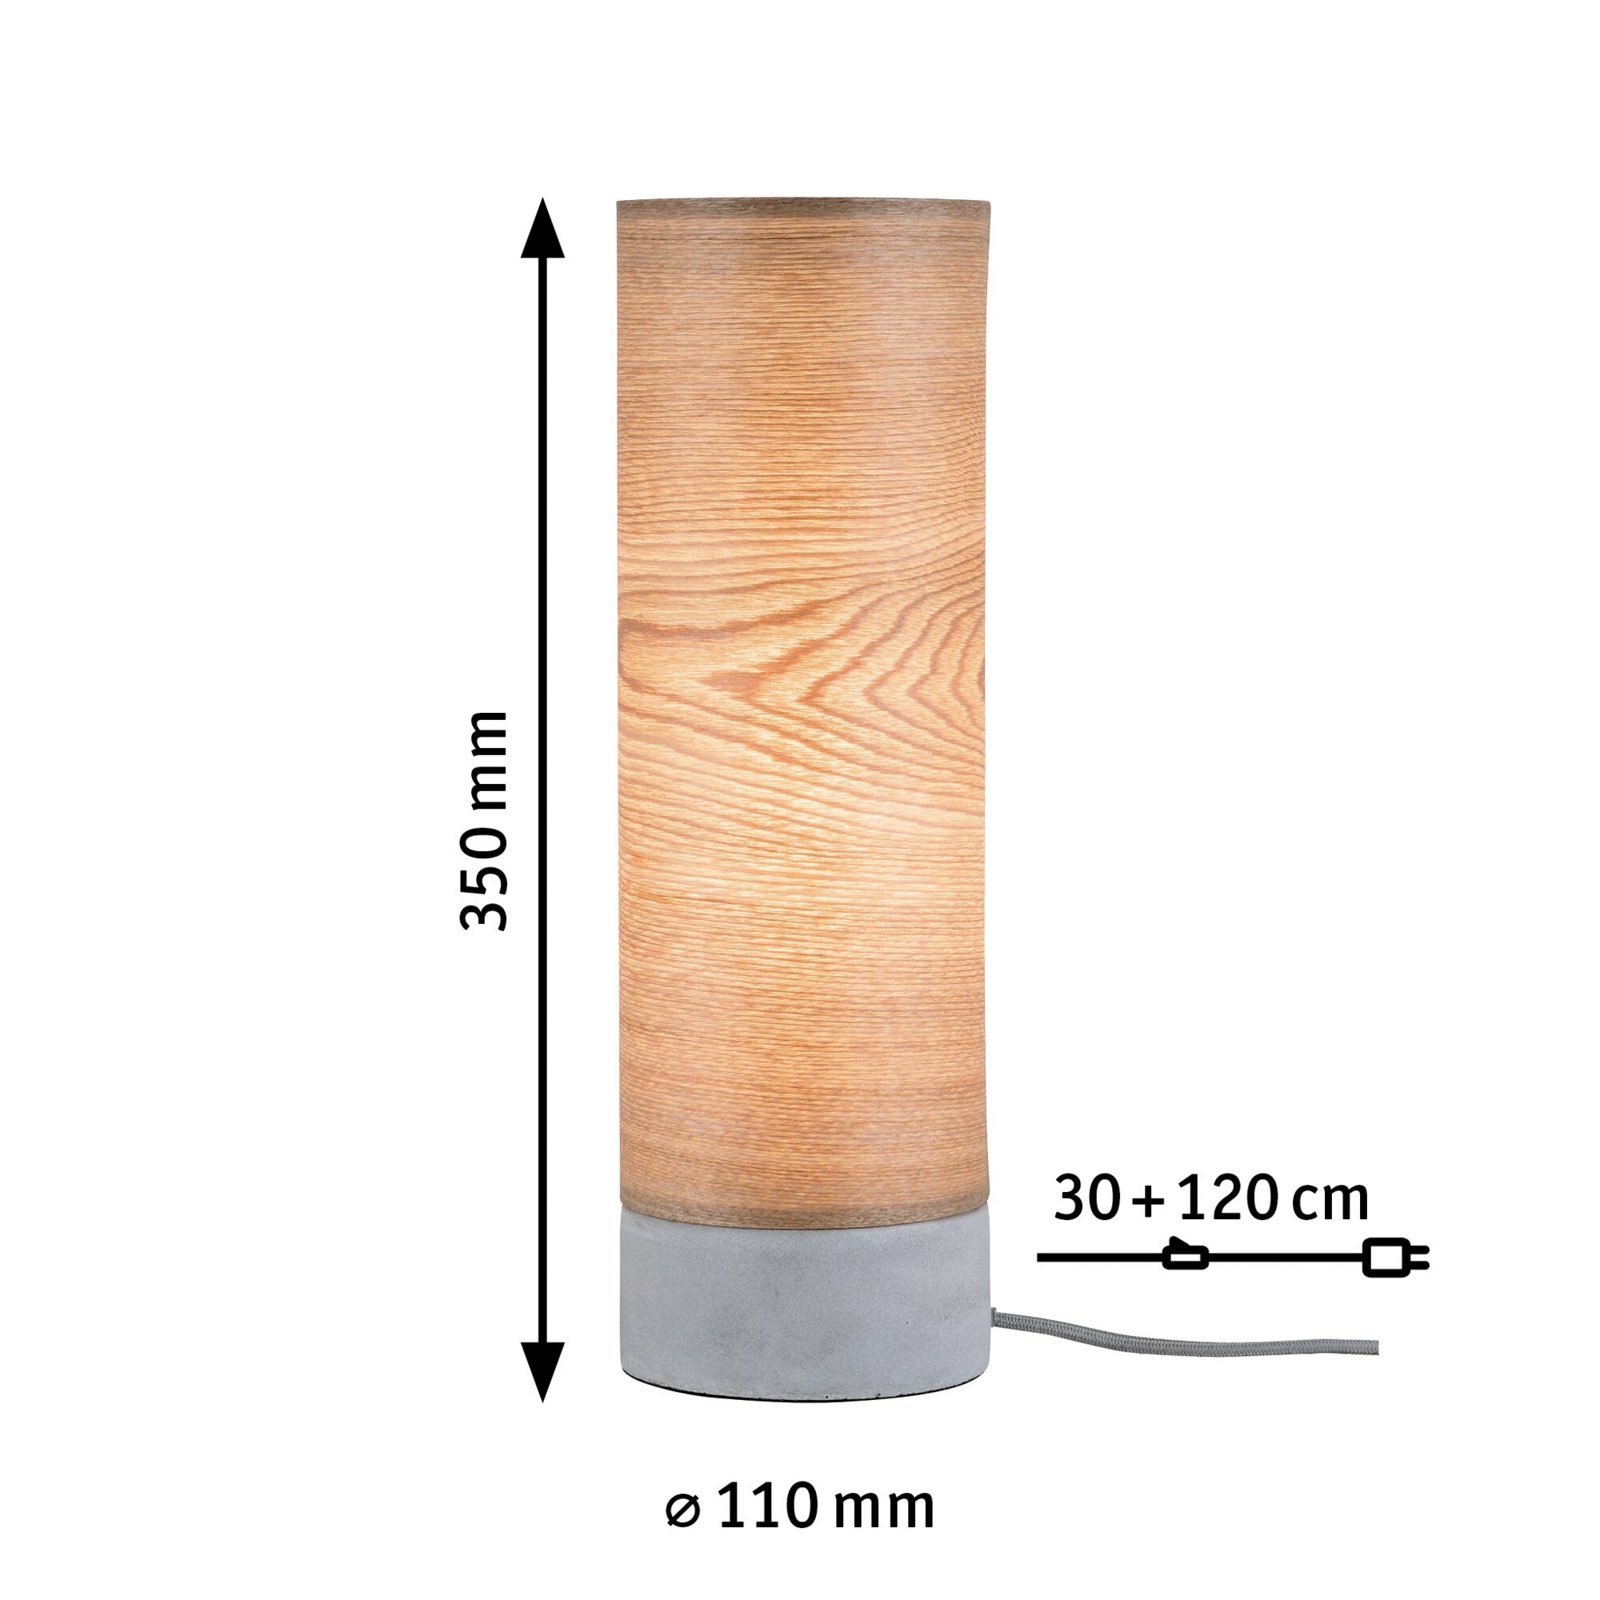 Cylindrisk bordlampe Skadi i træ med betonfod